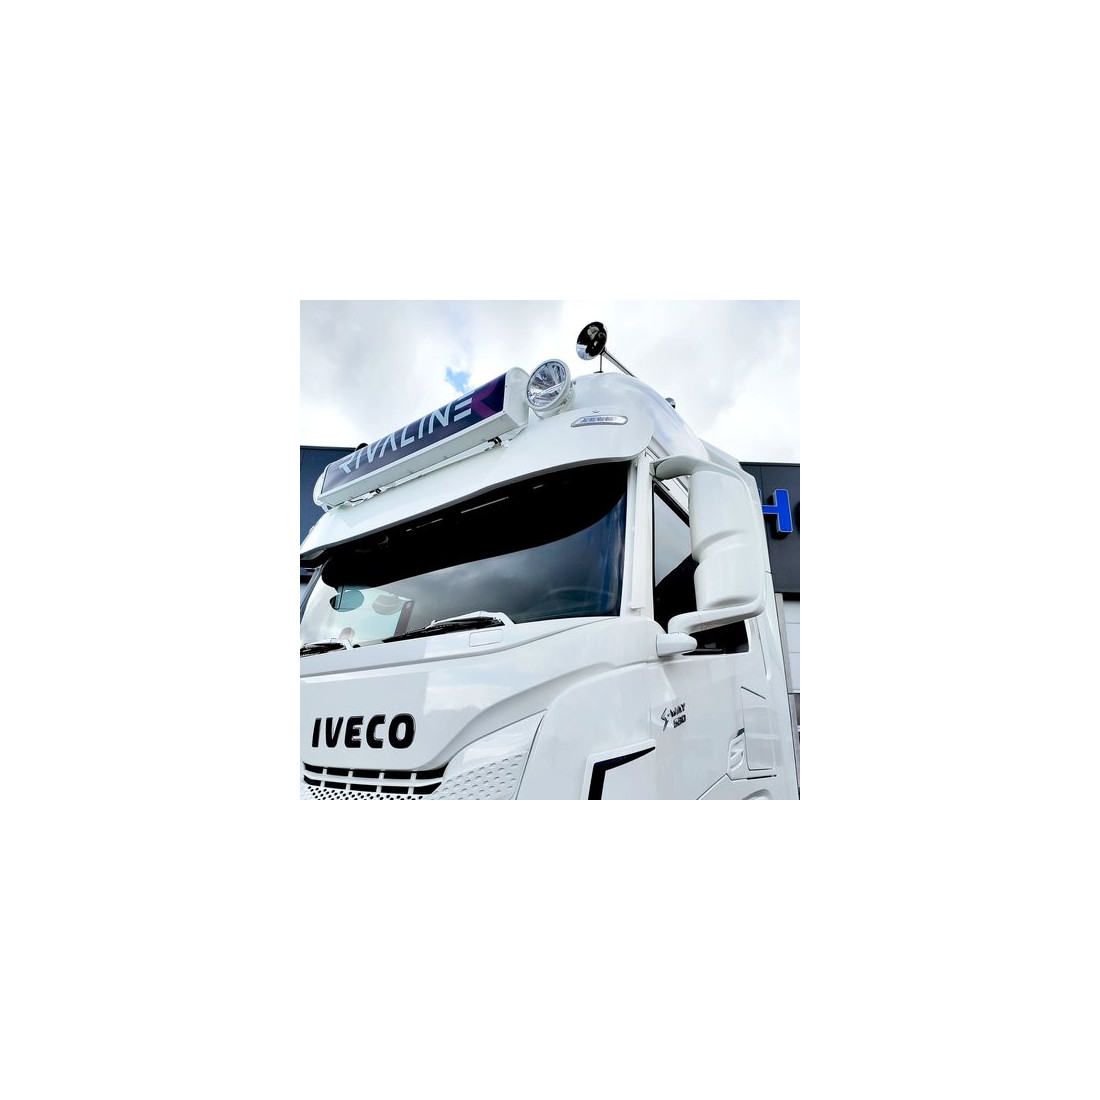 Iveco S-Way Pare Soleil - Solar Guard Exclusive Truckparts France